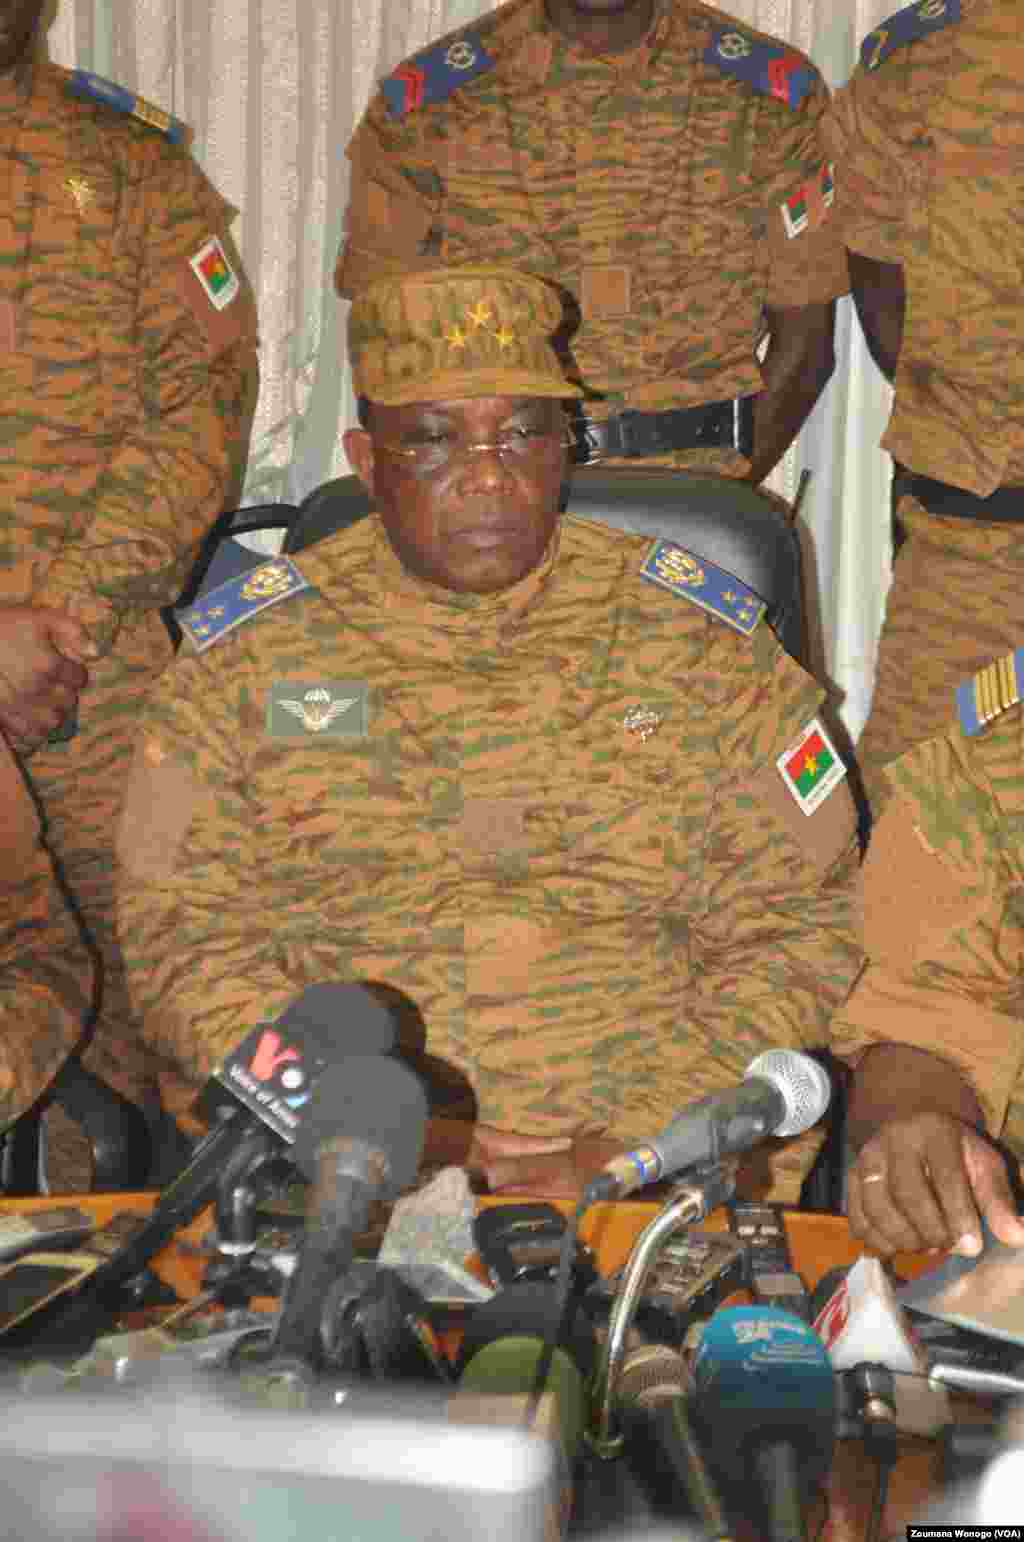 Burkina Faso's military chief General Honore Traore